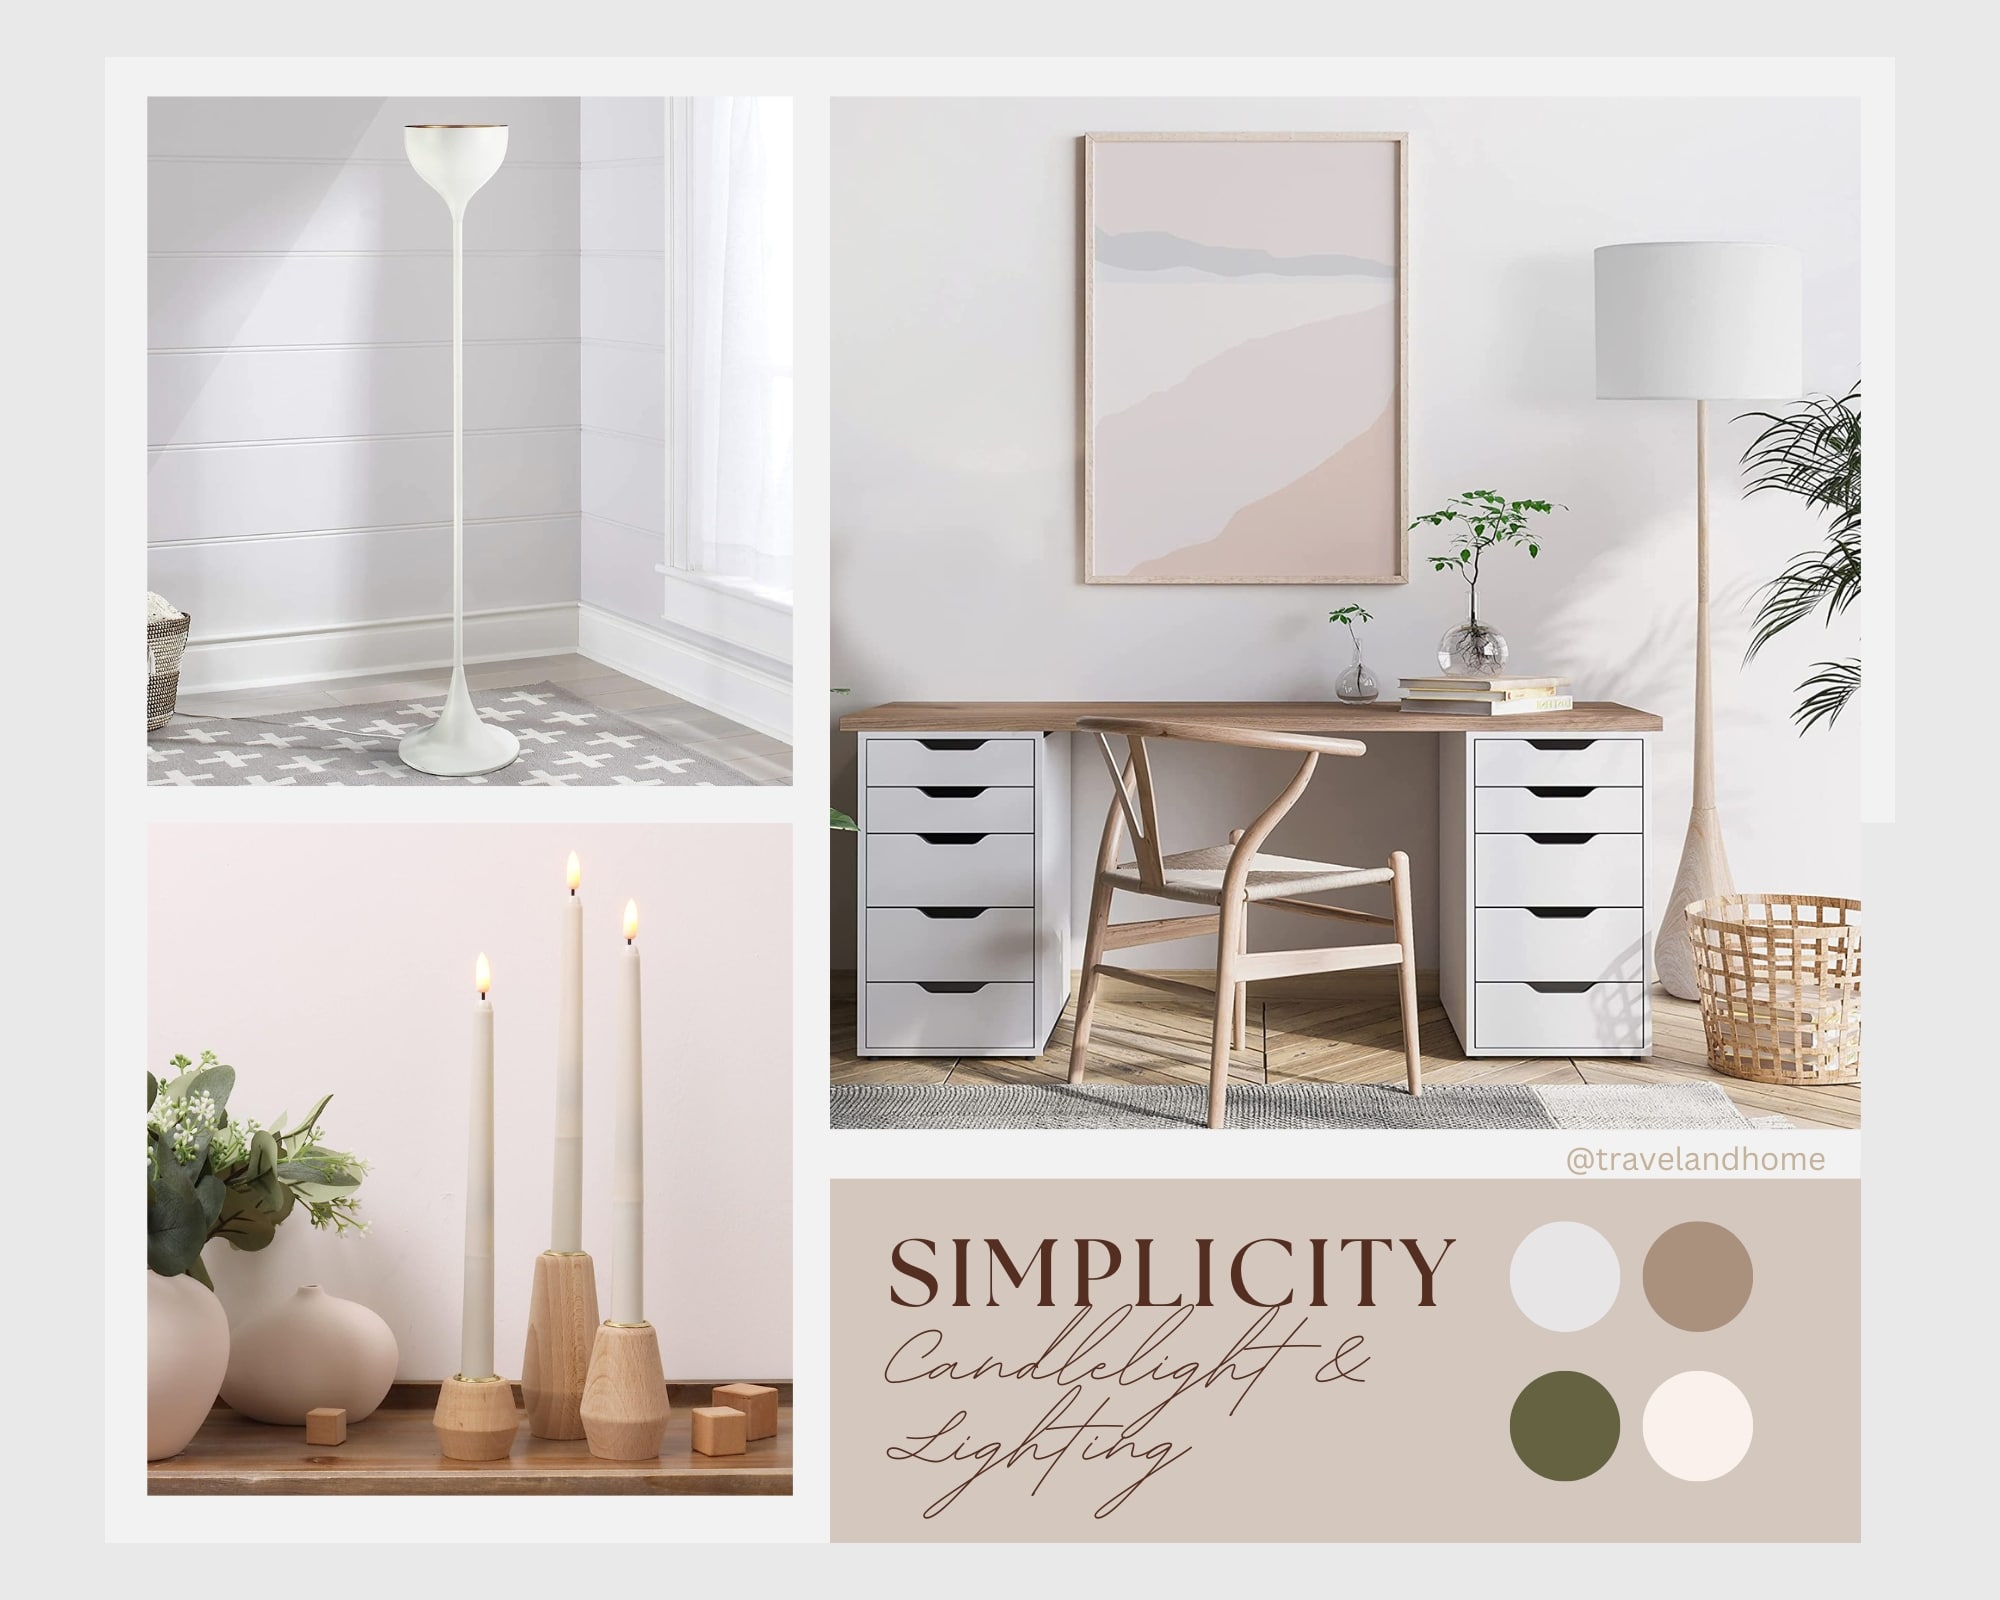 Candlelight & lighting, Scandinavian simplicity minimalist interior decor, interior design tips min